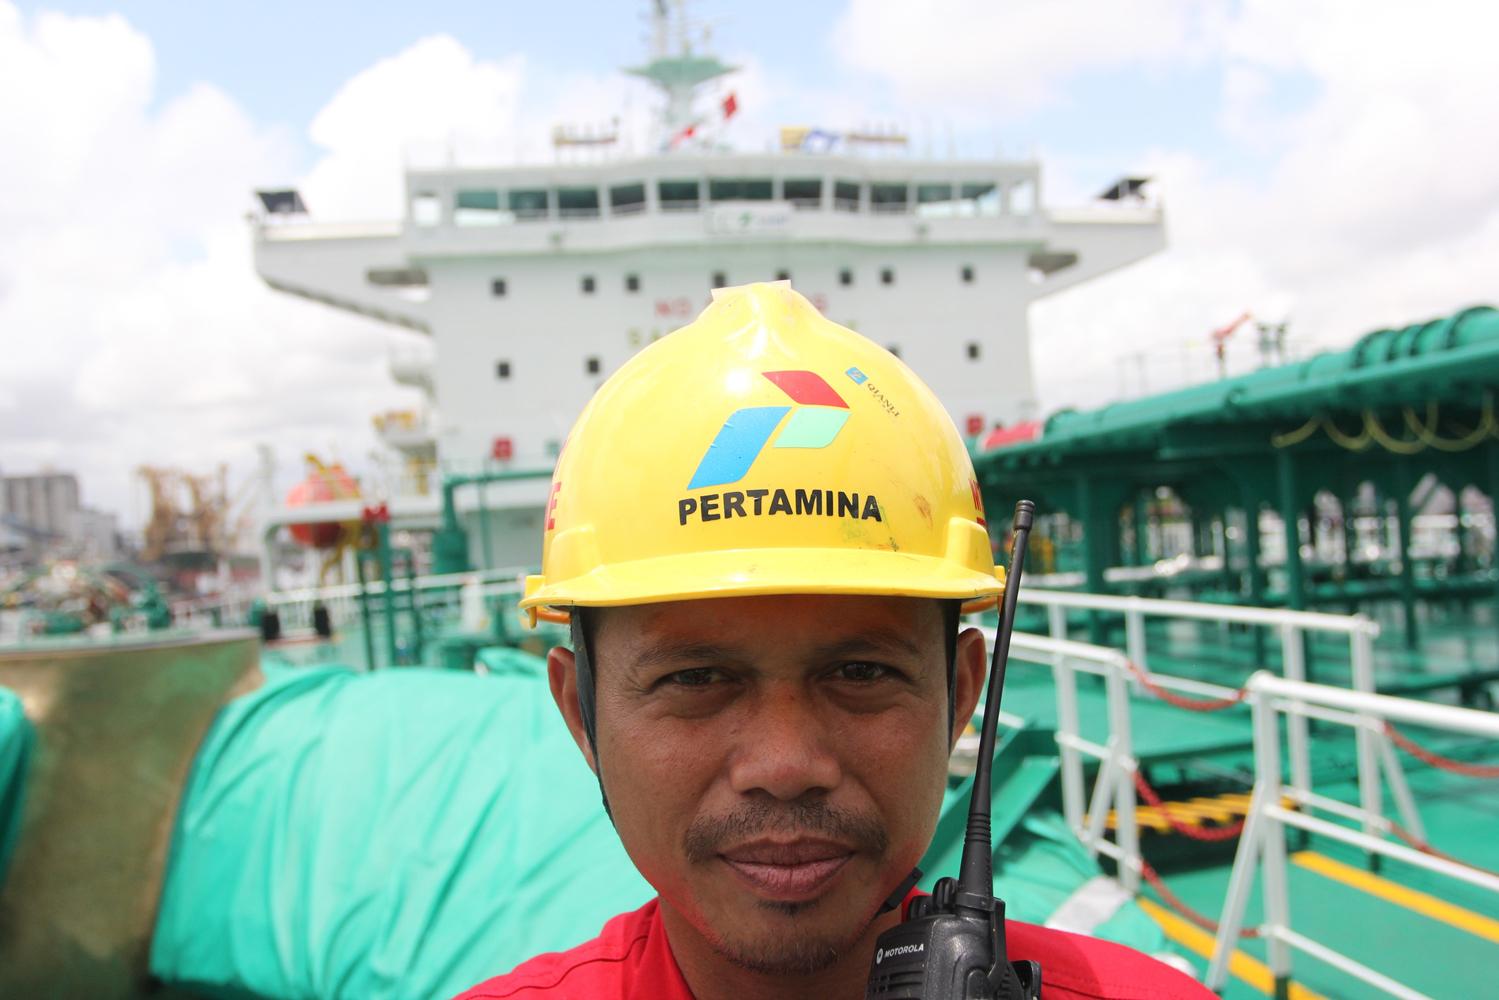 Hingga akhir 2016, Pertamina akan memiliki 72 unit kapal. Sebanyak 34 unit merupakan kapal yang diproduksi oleh galangan kapal nasional, Dari jumlah tersebut, 30 unit sudah beroperasi dan 4 unit dalam tahap konstruksi.